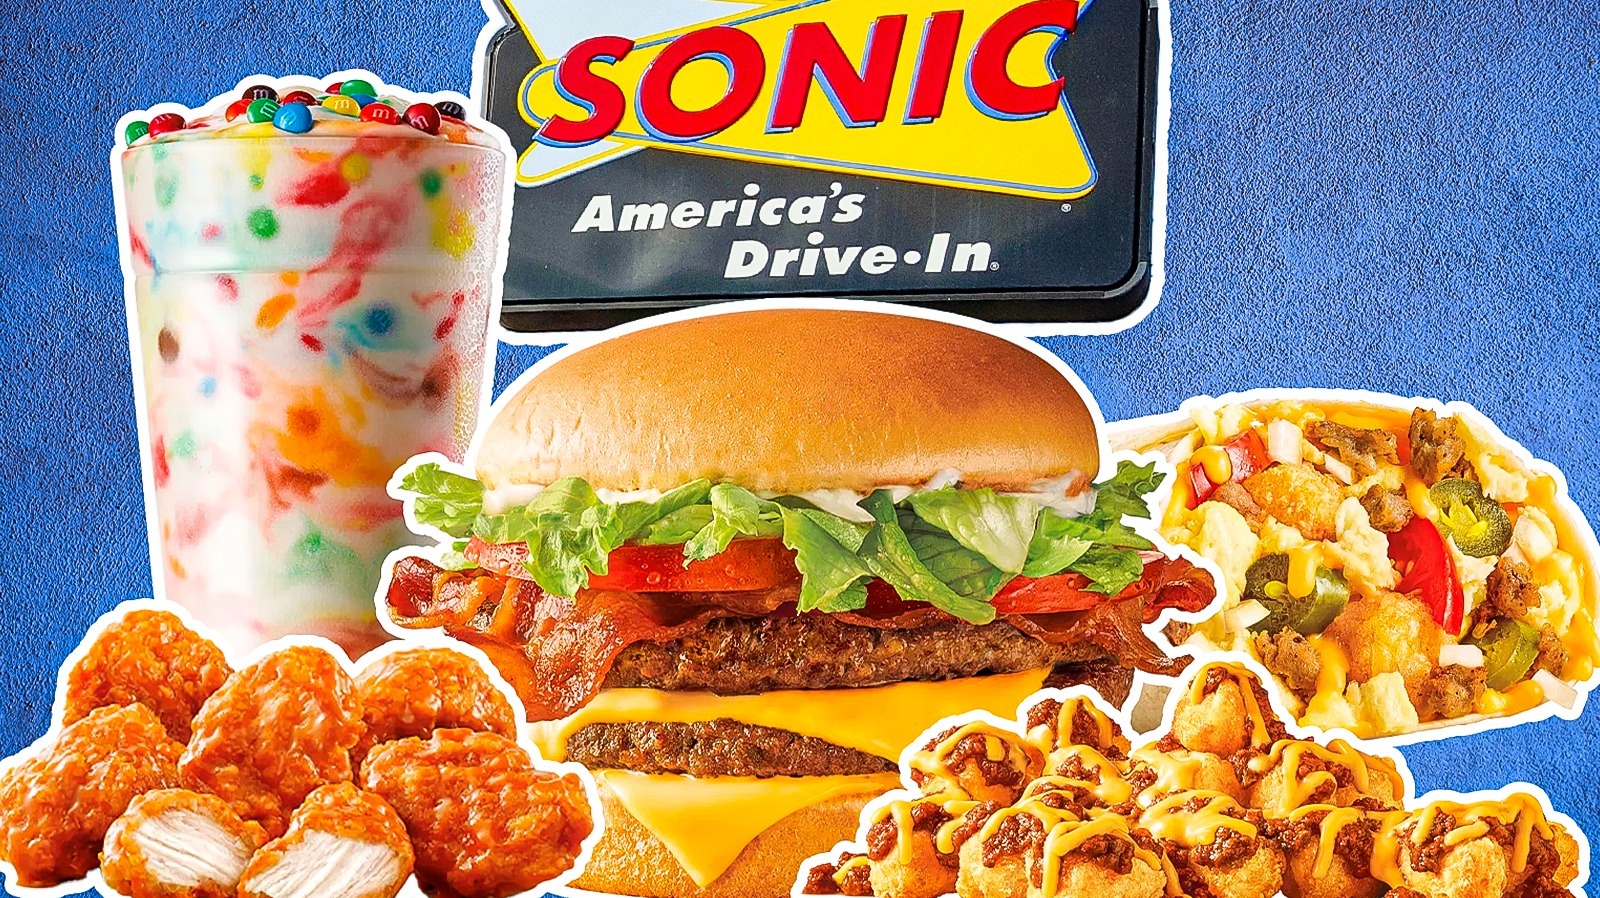 Sonic Drive-In - Three amazing NEW menu items will be